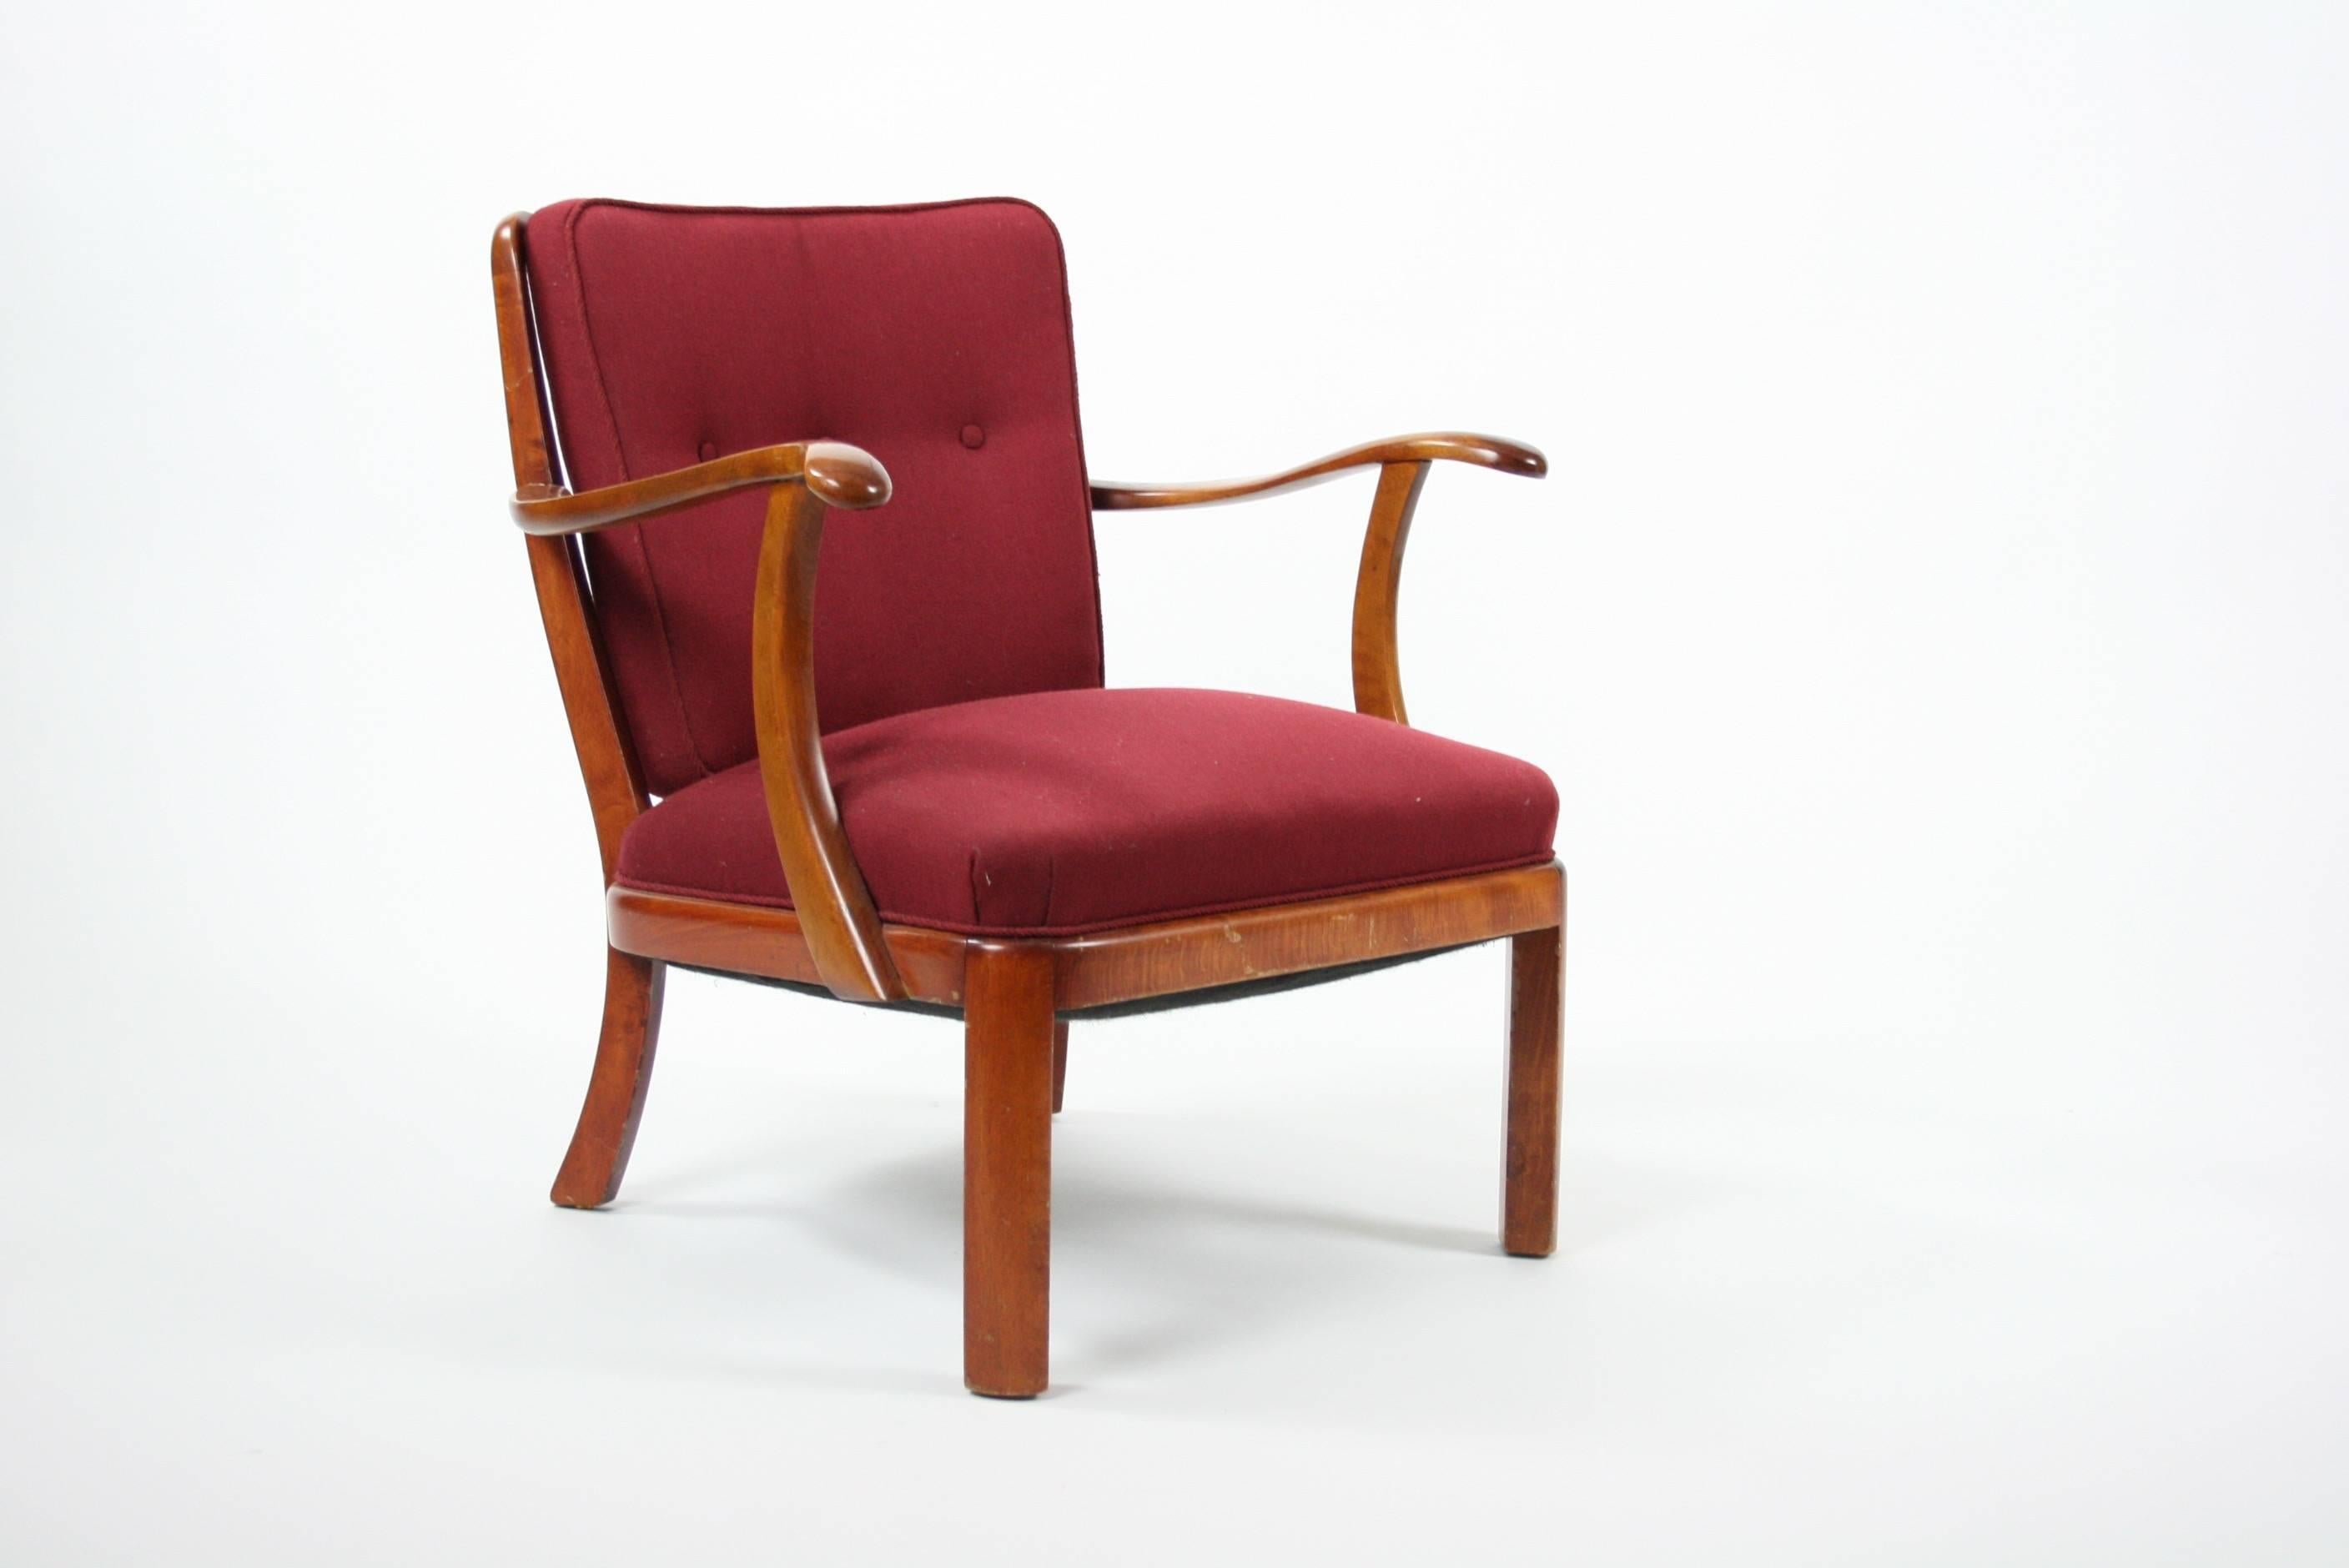 Søren Hansen lounge chair model 1628 Fritz Hansen Denmark, circa 1940 stained beech, upholstery.
Literature: Fritz Hansen, manufacturer's catalog, 1940, pg. 10